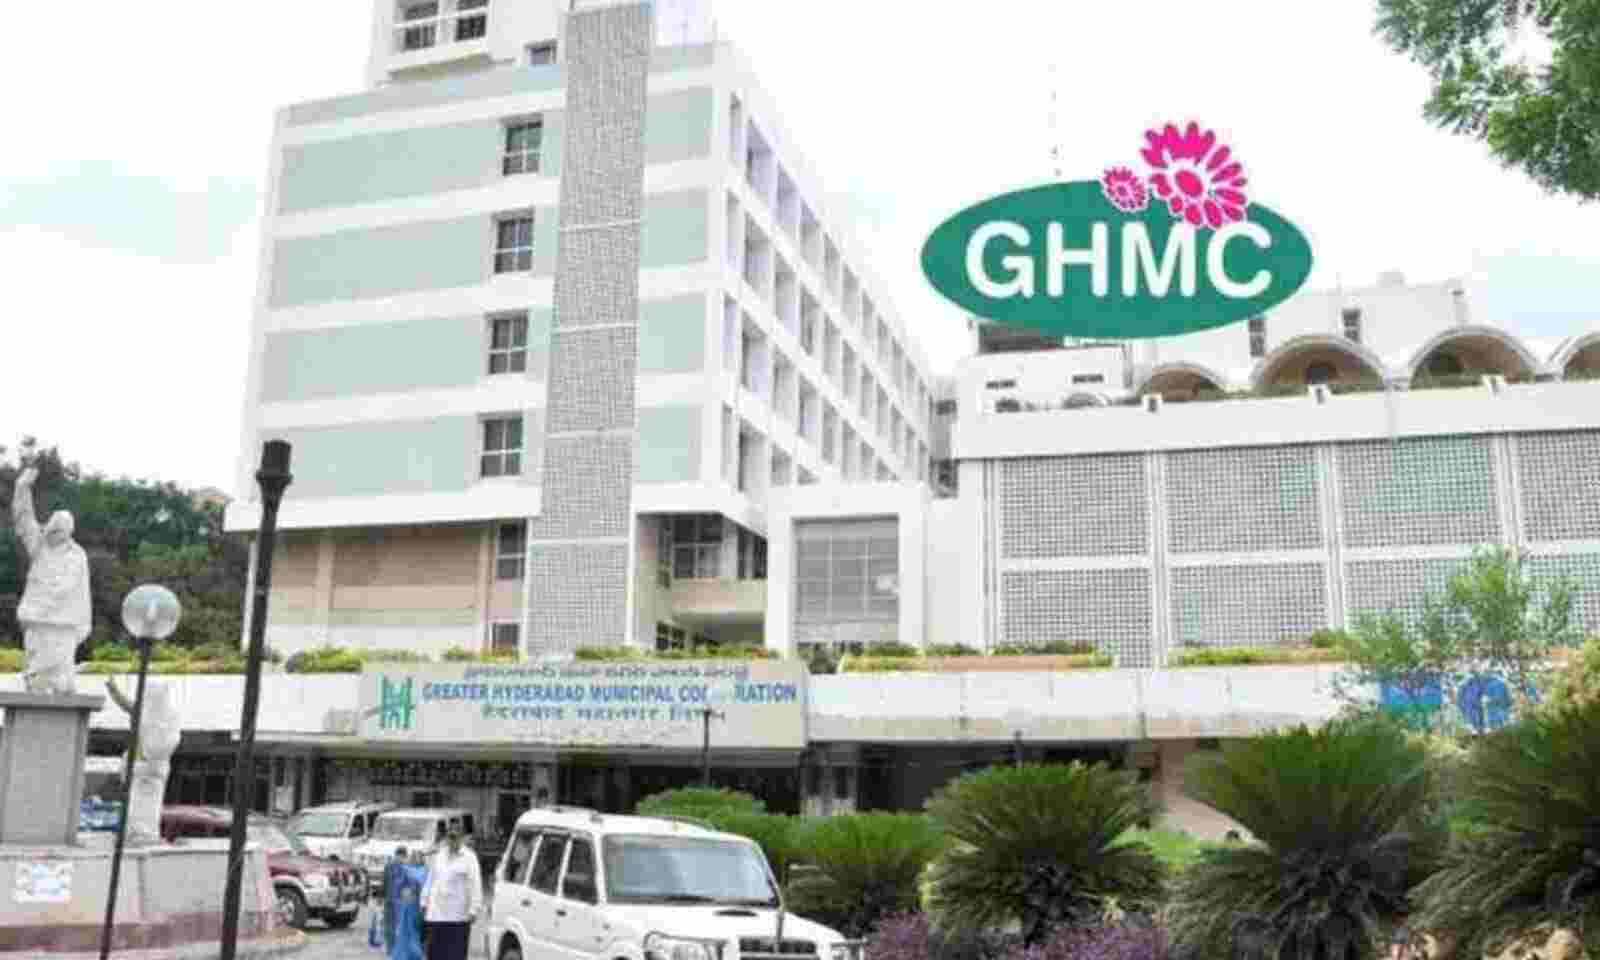 GHMC invites public entries to improve sanitation